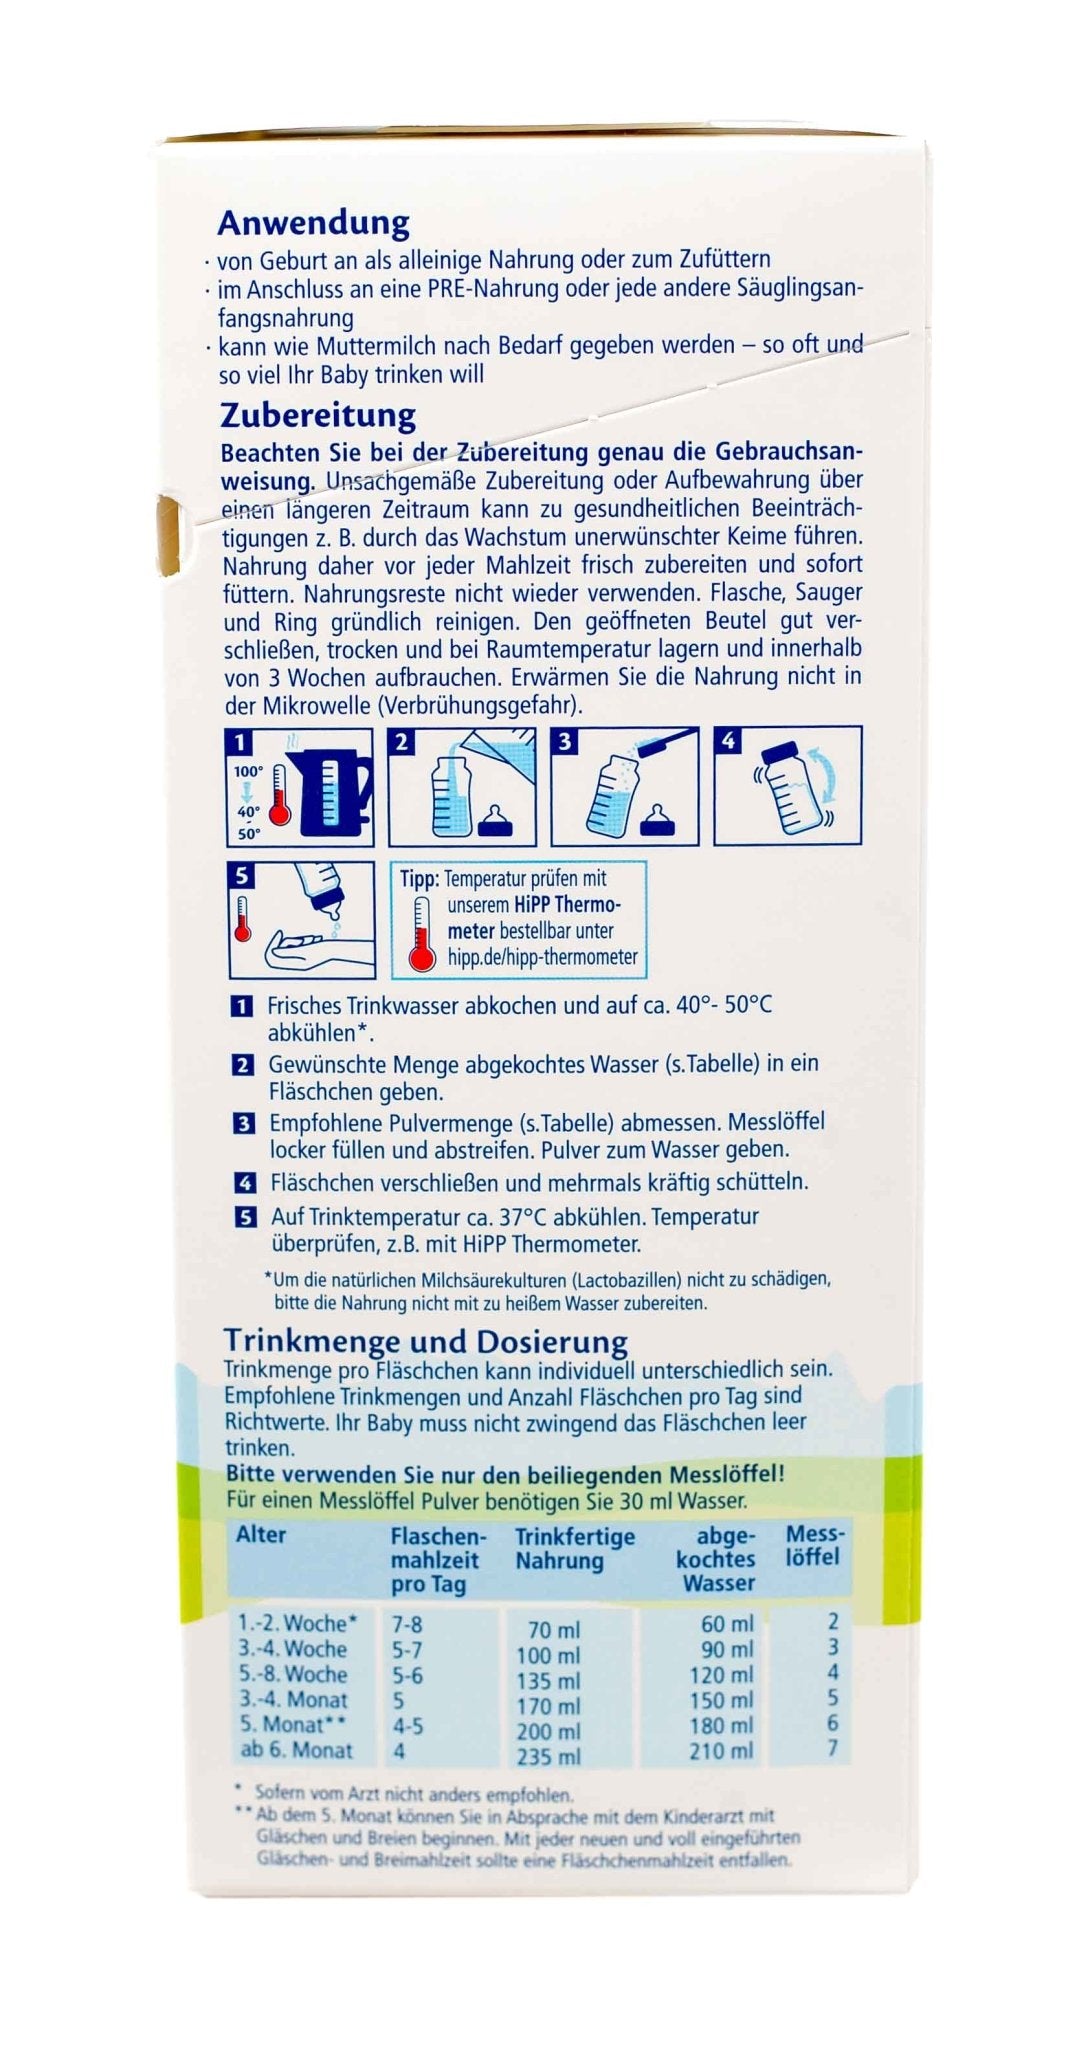 HiPP German Stage 3 Baby Formula Bio Combiotik (600g)